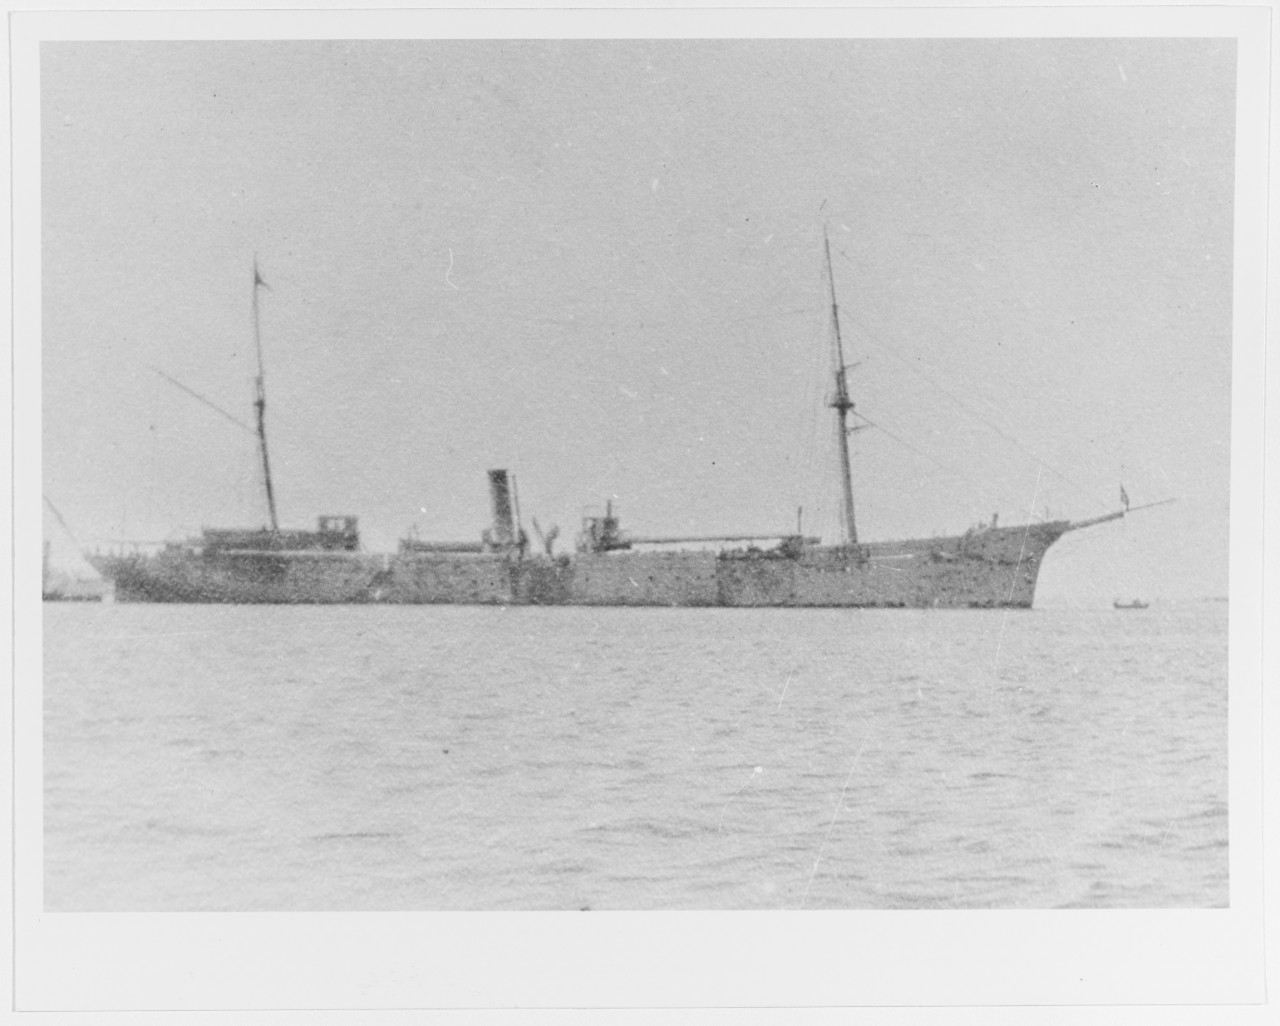 ASIA (Russian cruiser, 1874-1911)